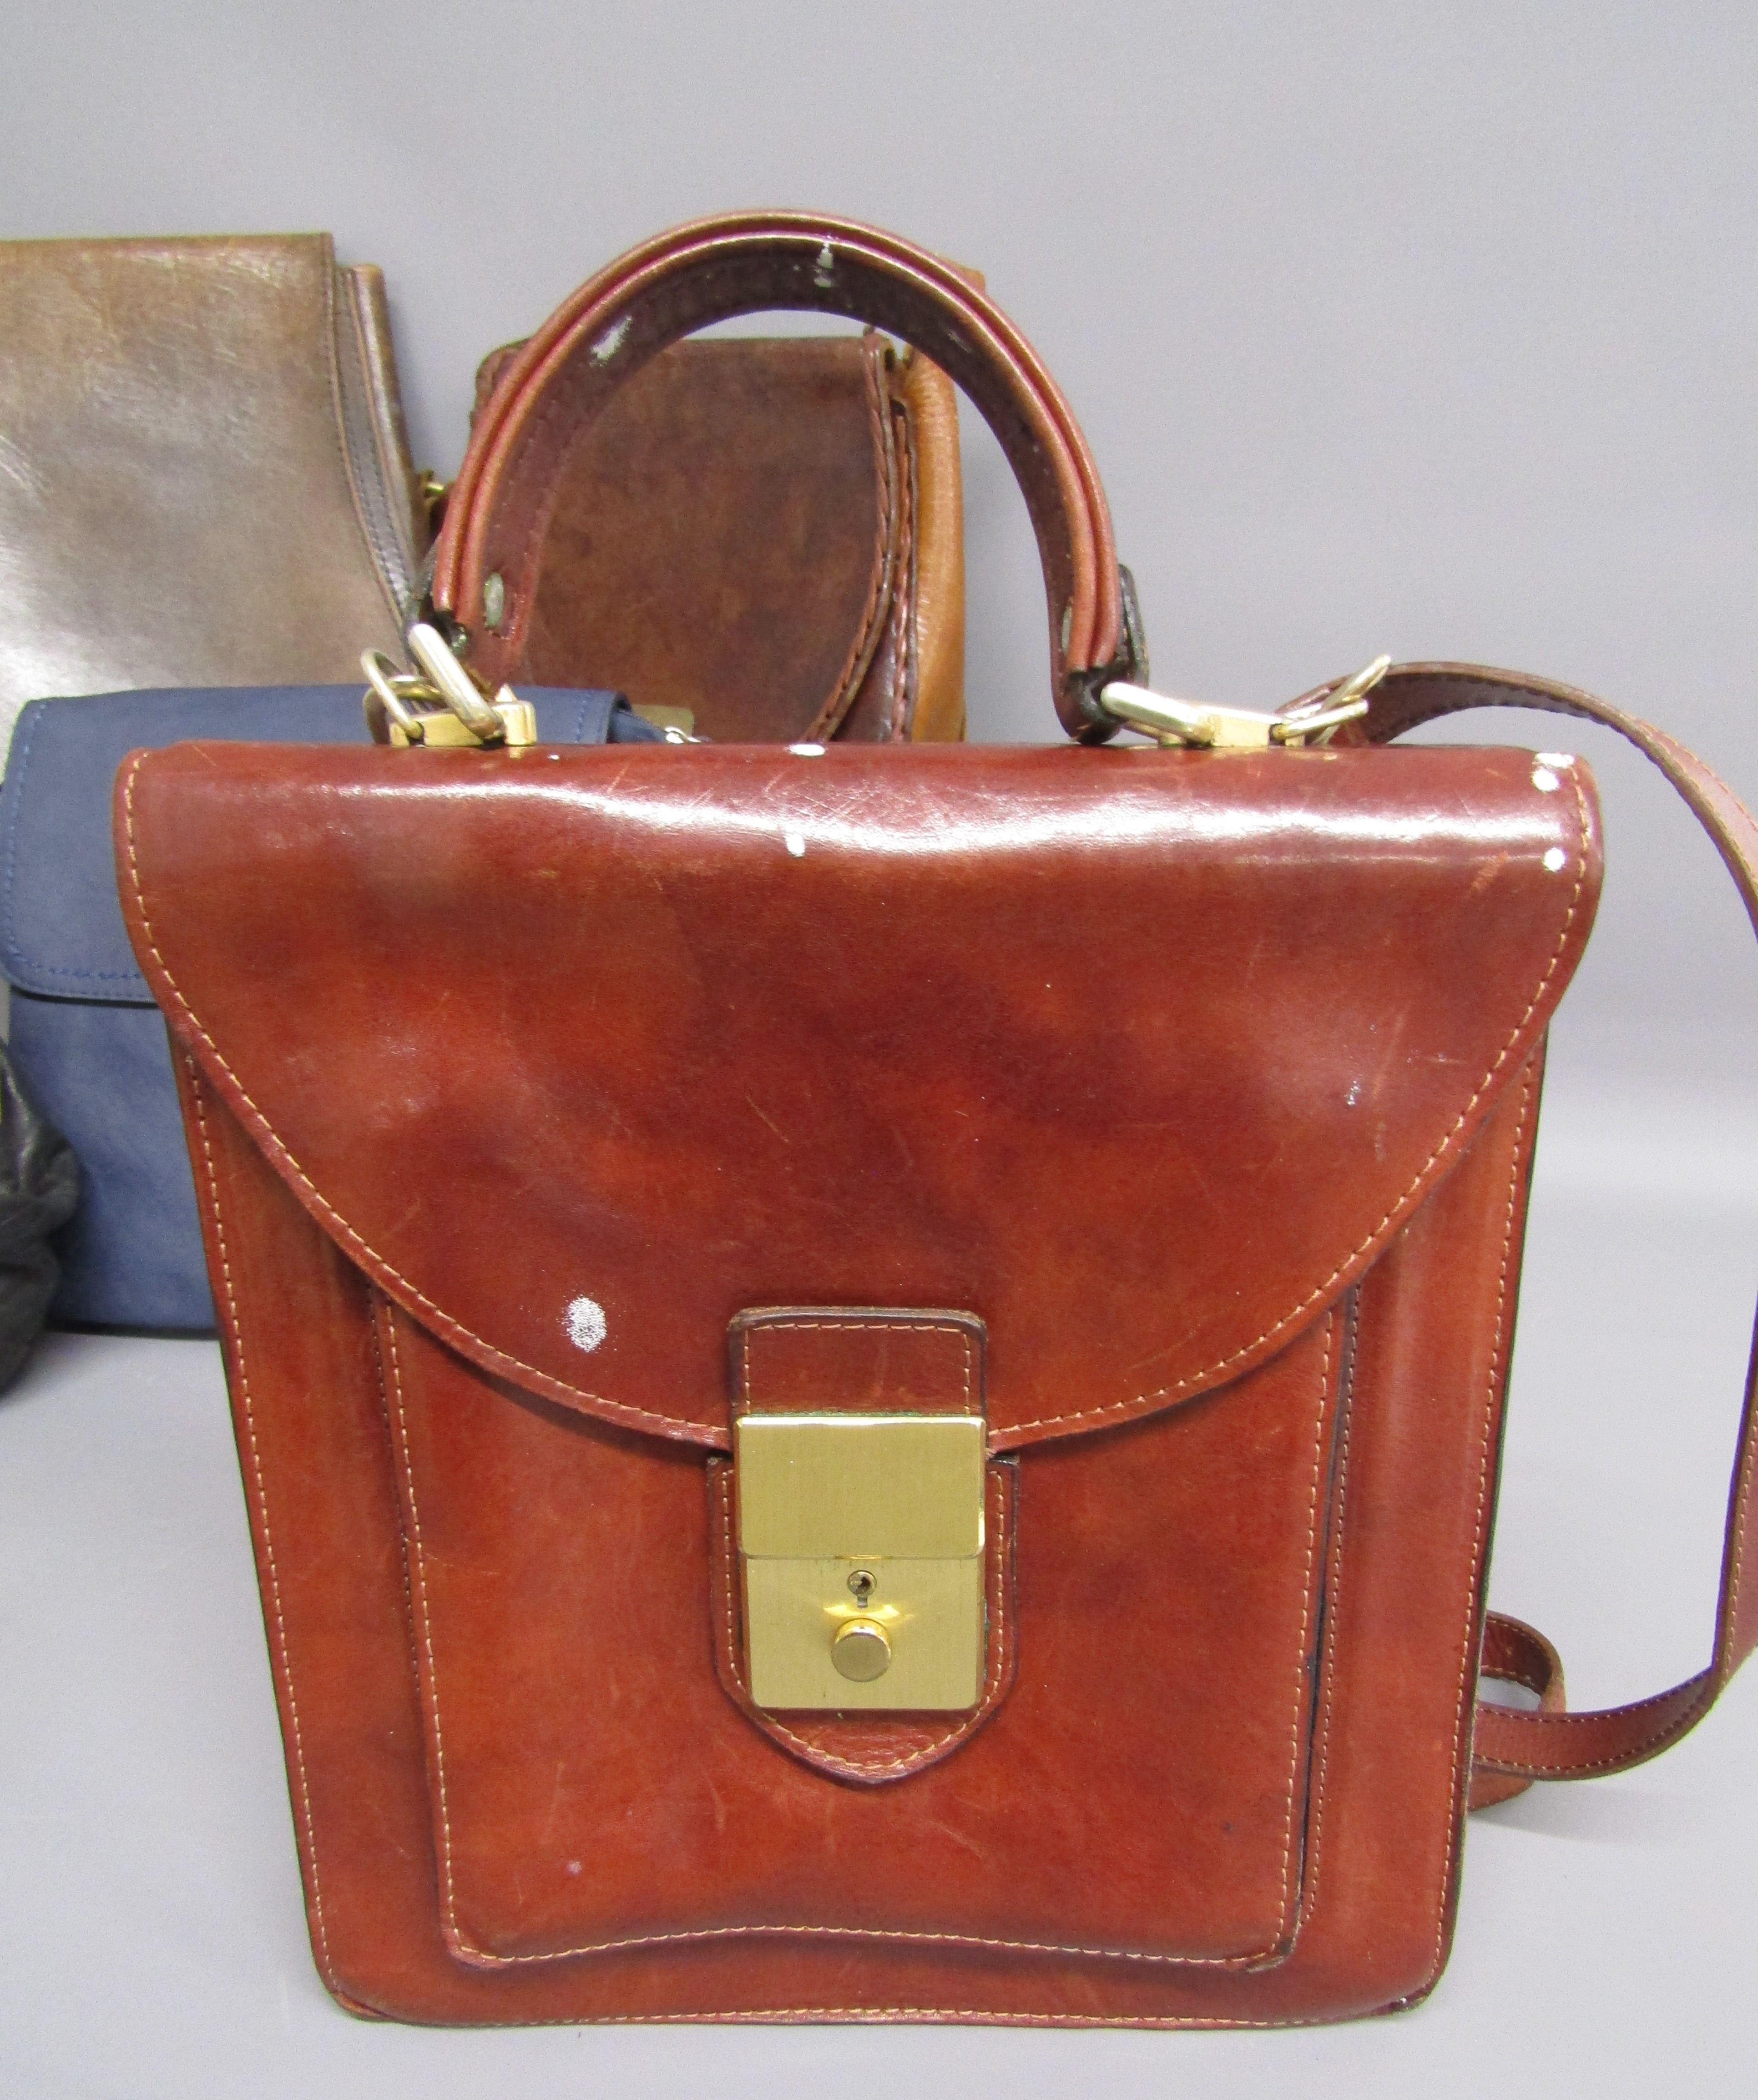 Brown leather bags - ladies handbags - Ri2K, Exella leather, Suzi Smith red leather etc - Image 2 of 6